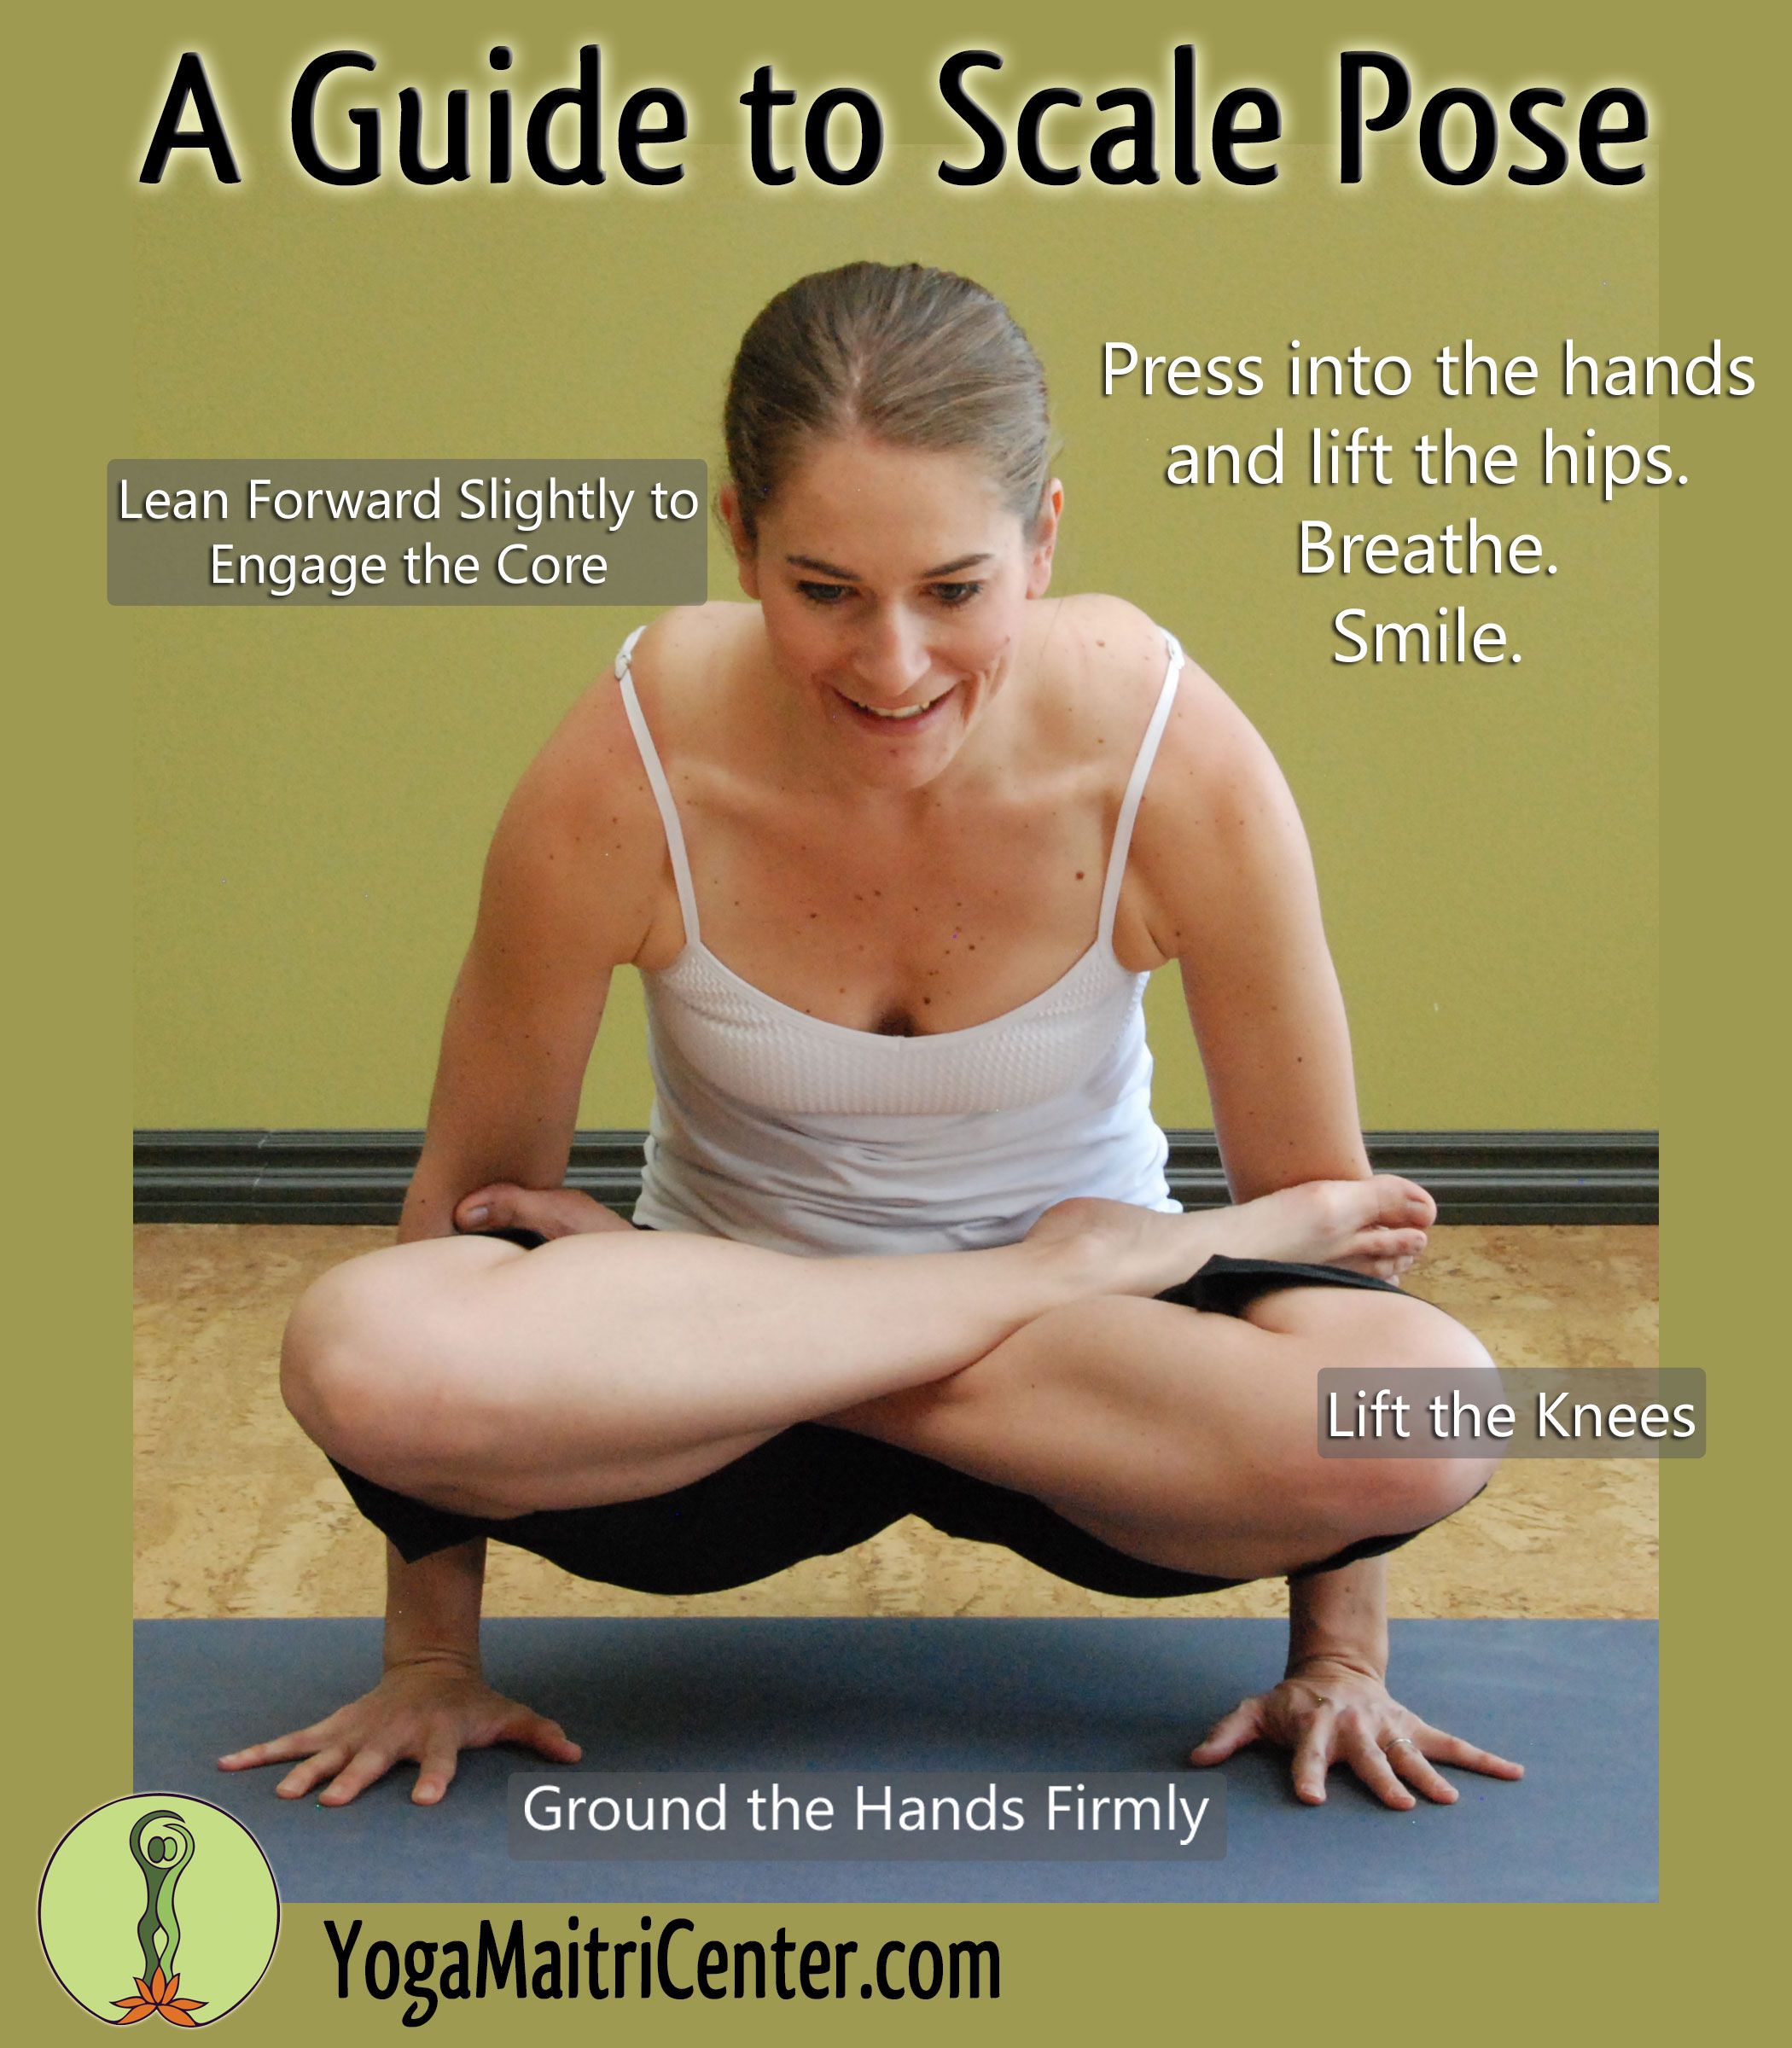 Scale Pose, tolasana | Monthly Yoga Themes & Poses | Pinterest ...